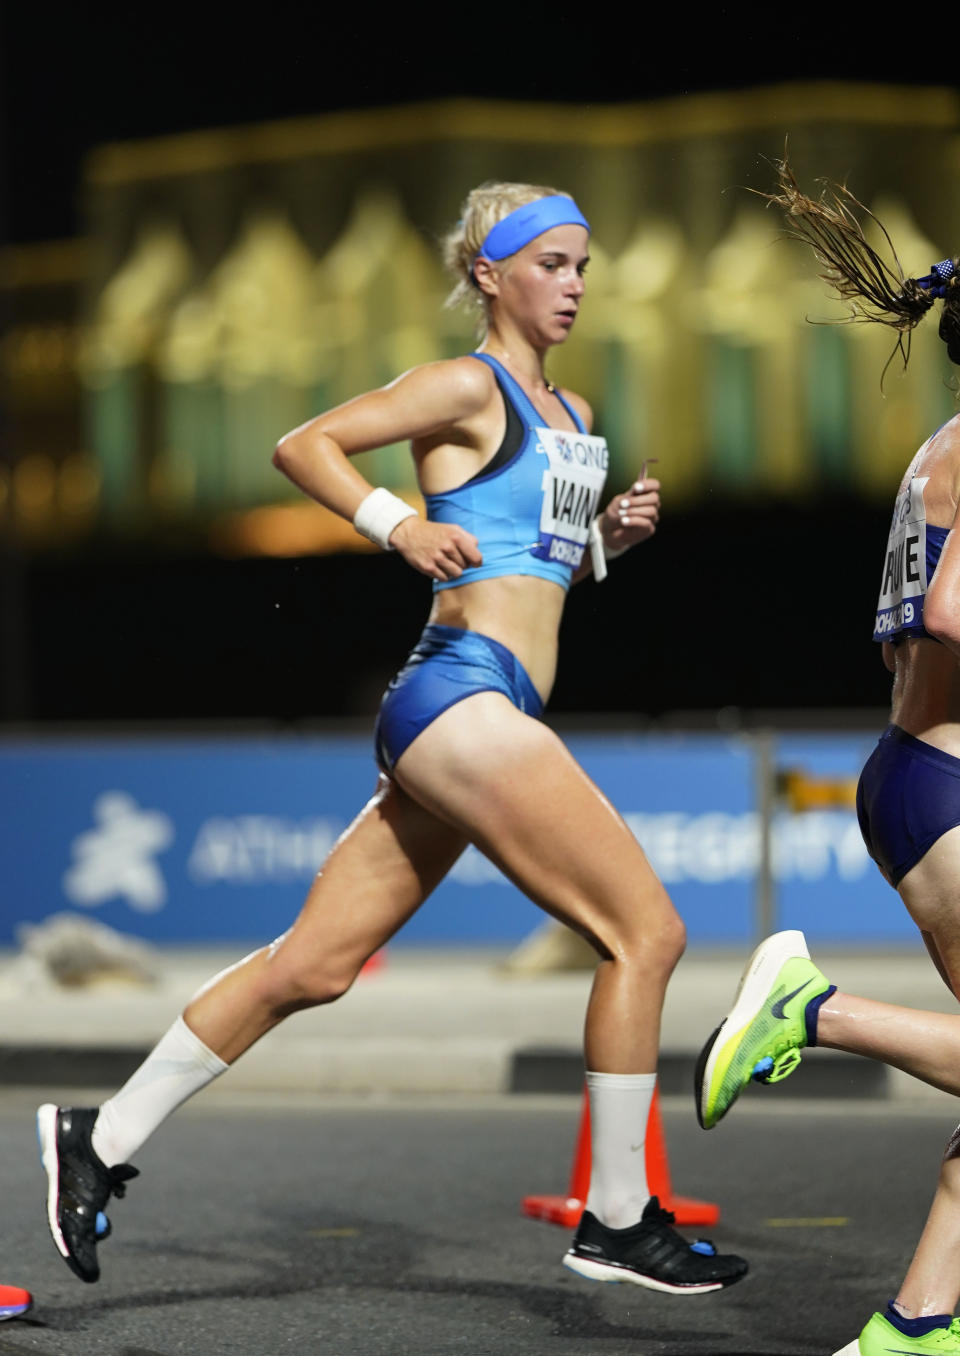 Finland's Alisa Vainio races during the women's marathon at the World Athletics Championships in Doha, Qatar, Saturday, Sept. 28, 2019. (AP Photo/Nick Didlick, Pool)